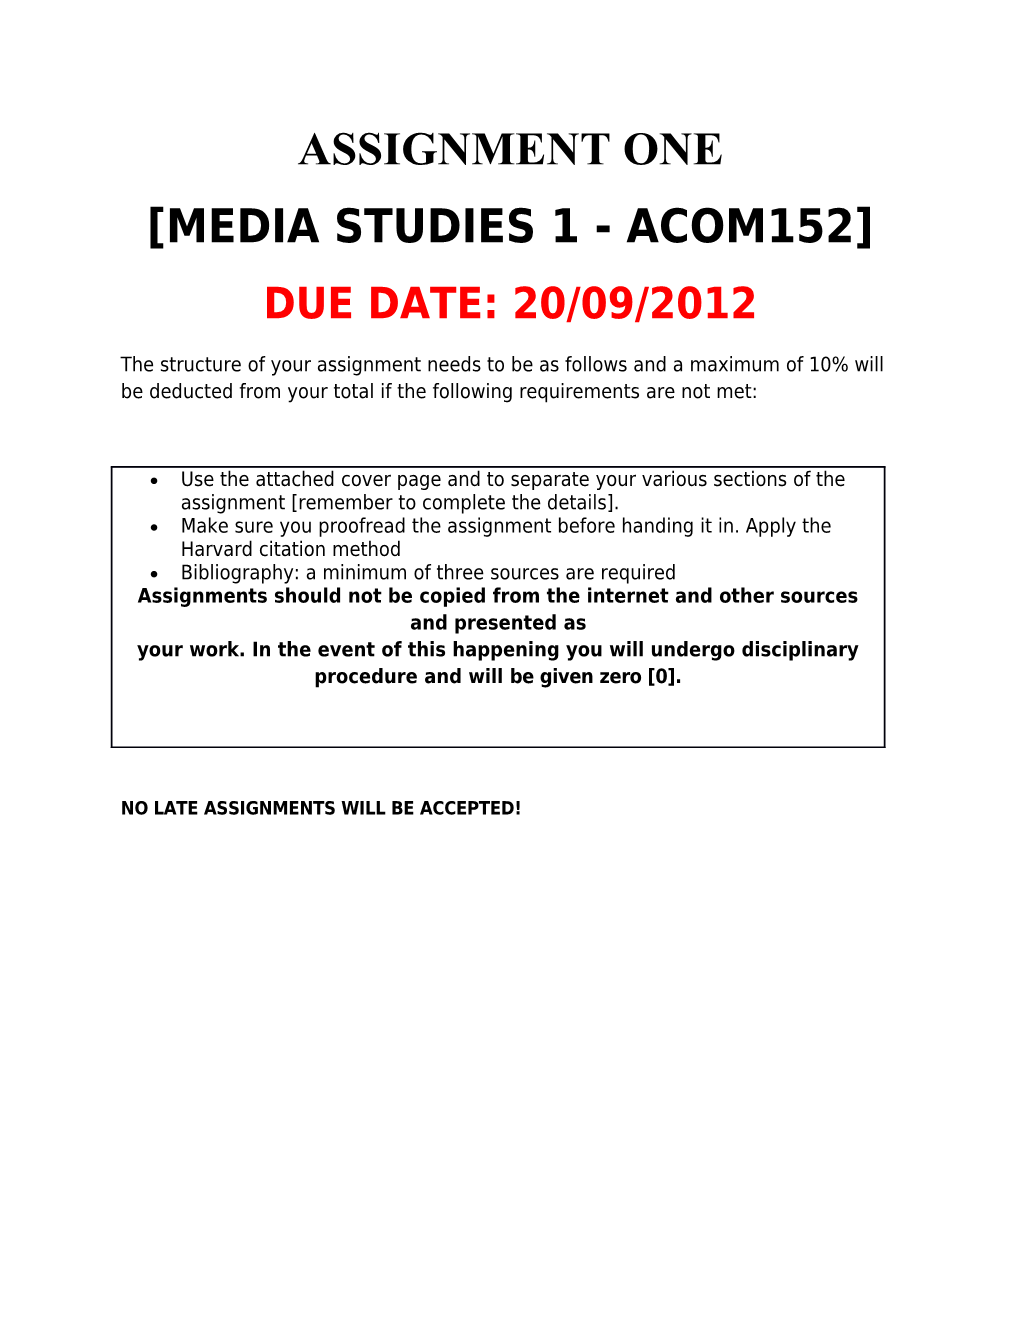 Media Studies 1 - Acom152